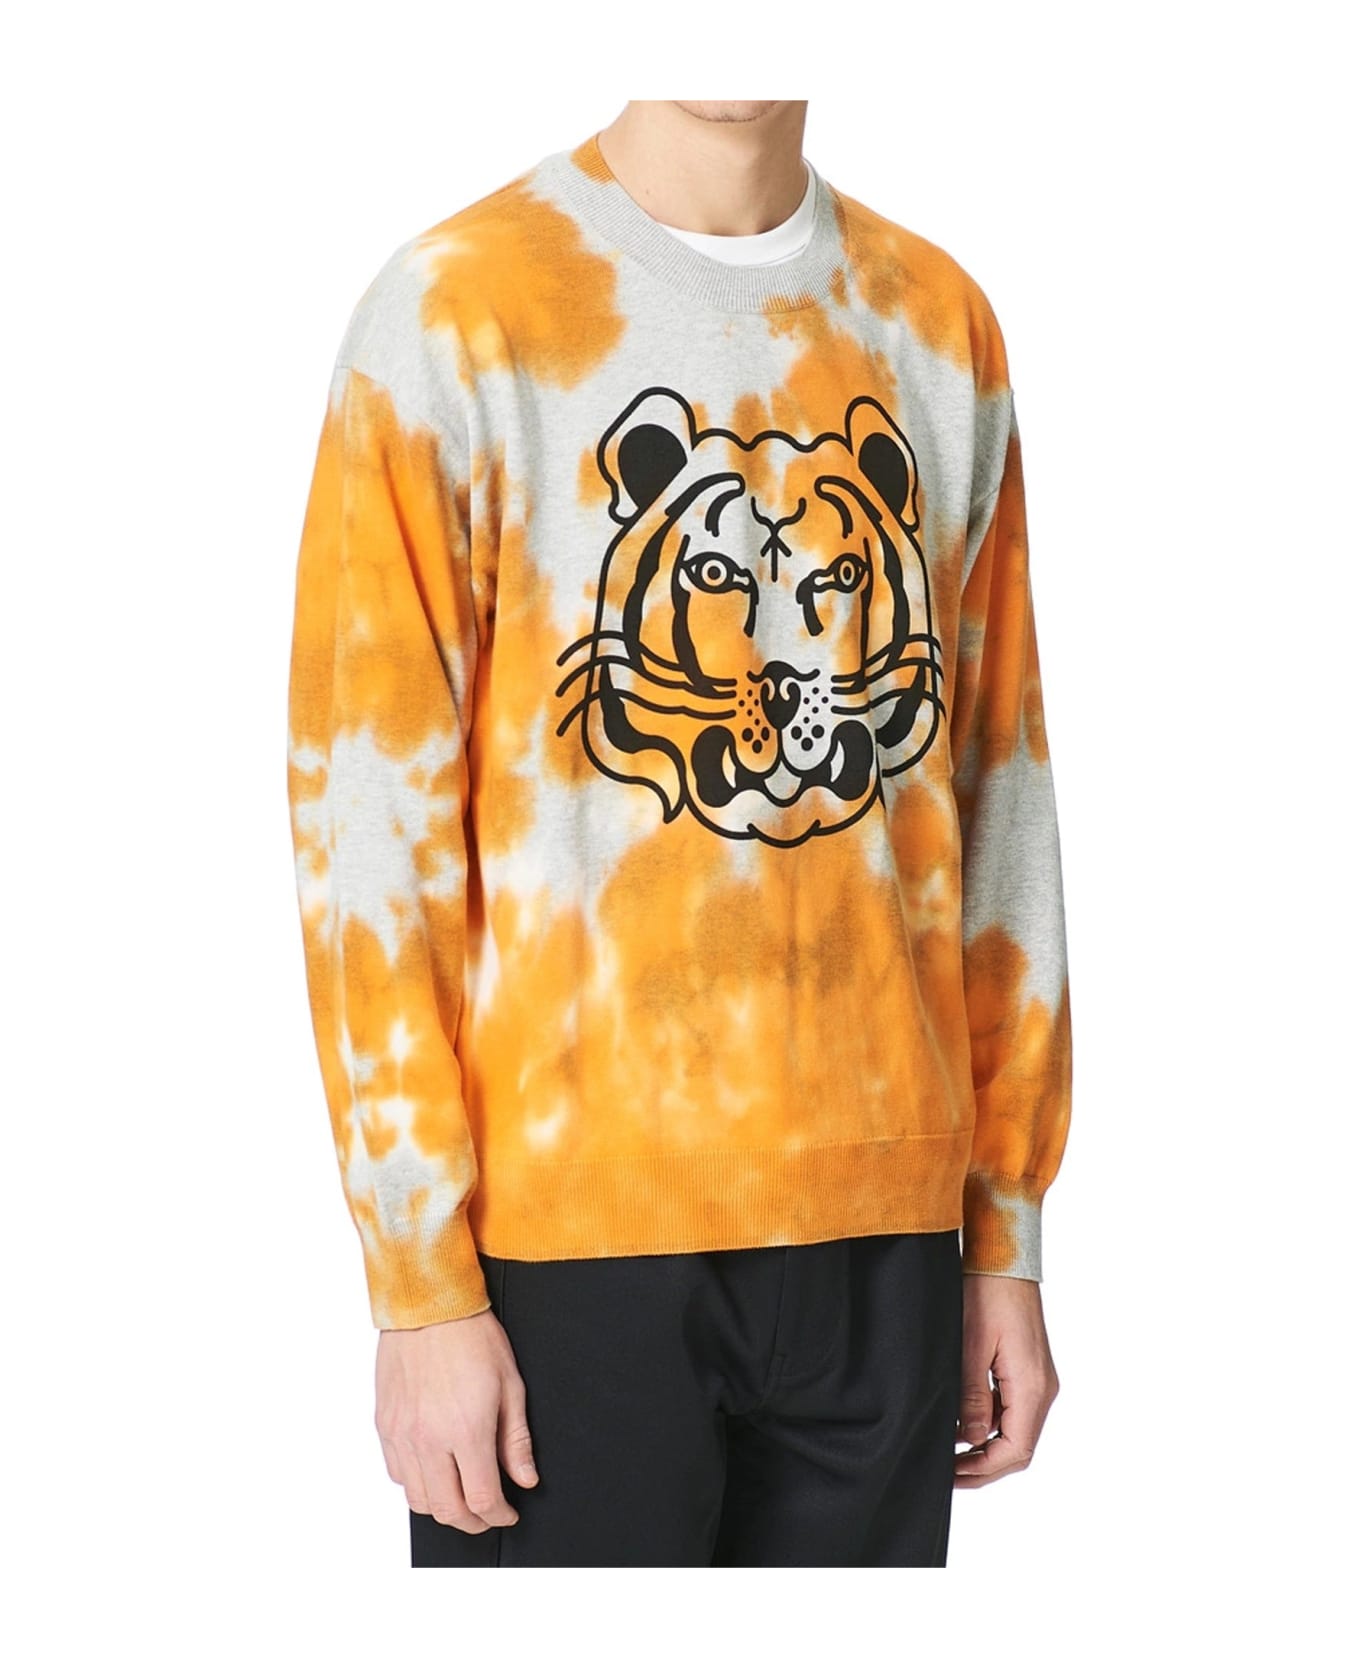 Kenzo Tiger Sweater - Orange